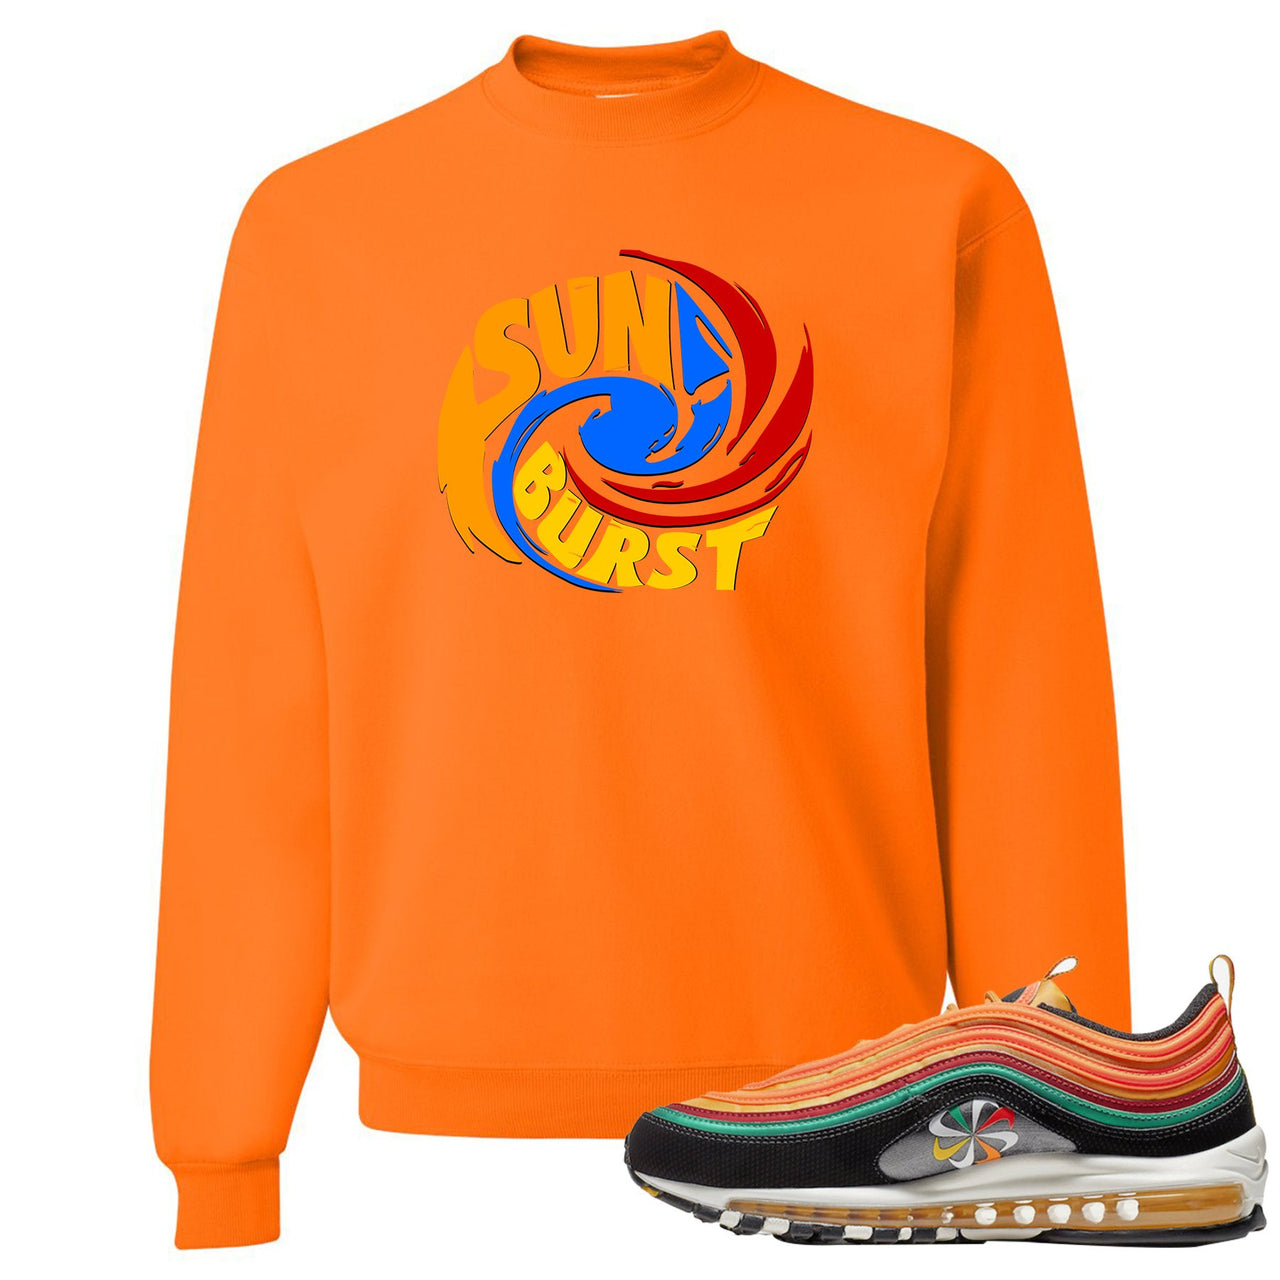 Printed on the front of the Air Max 97 Sunburst safety orange sneaker matching crewneck sweatshirt is the Sunburst Hurricane logo